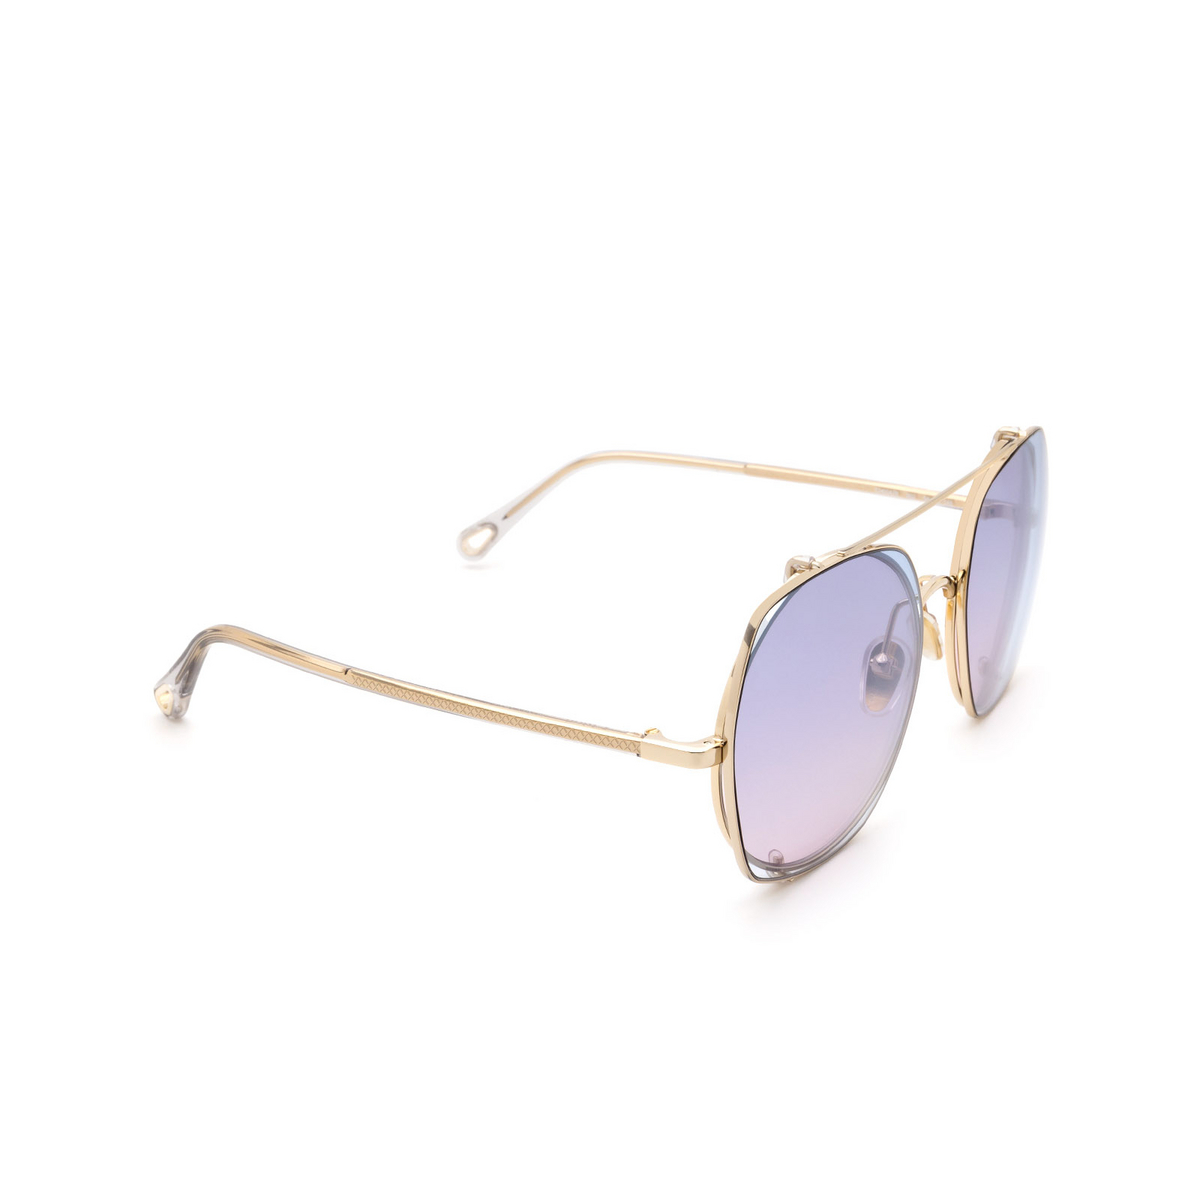 Chloé® Sunglasses: CH0042S color Gold 002 - front view.